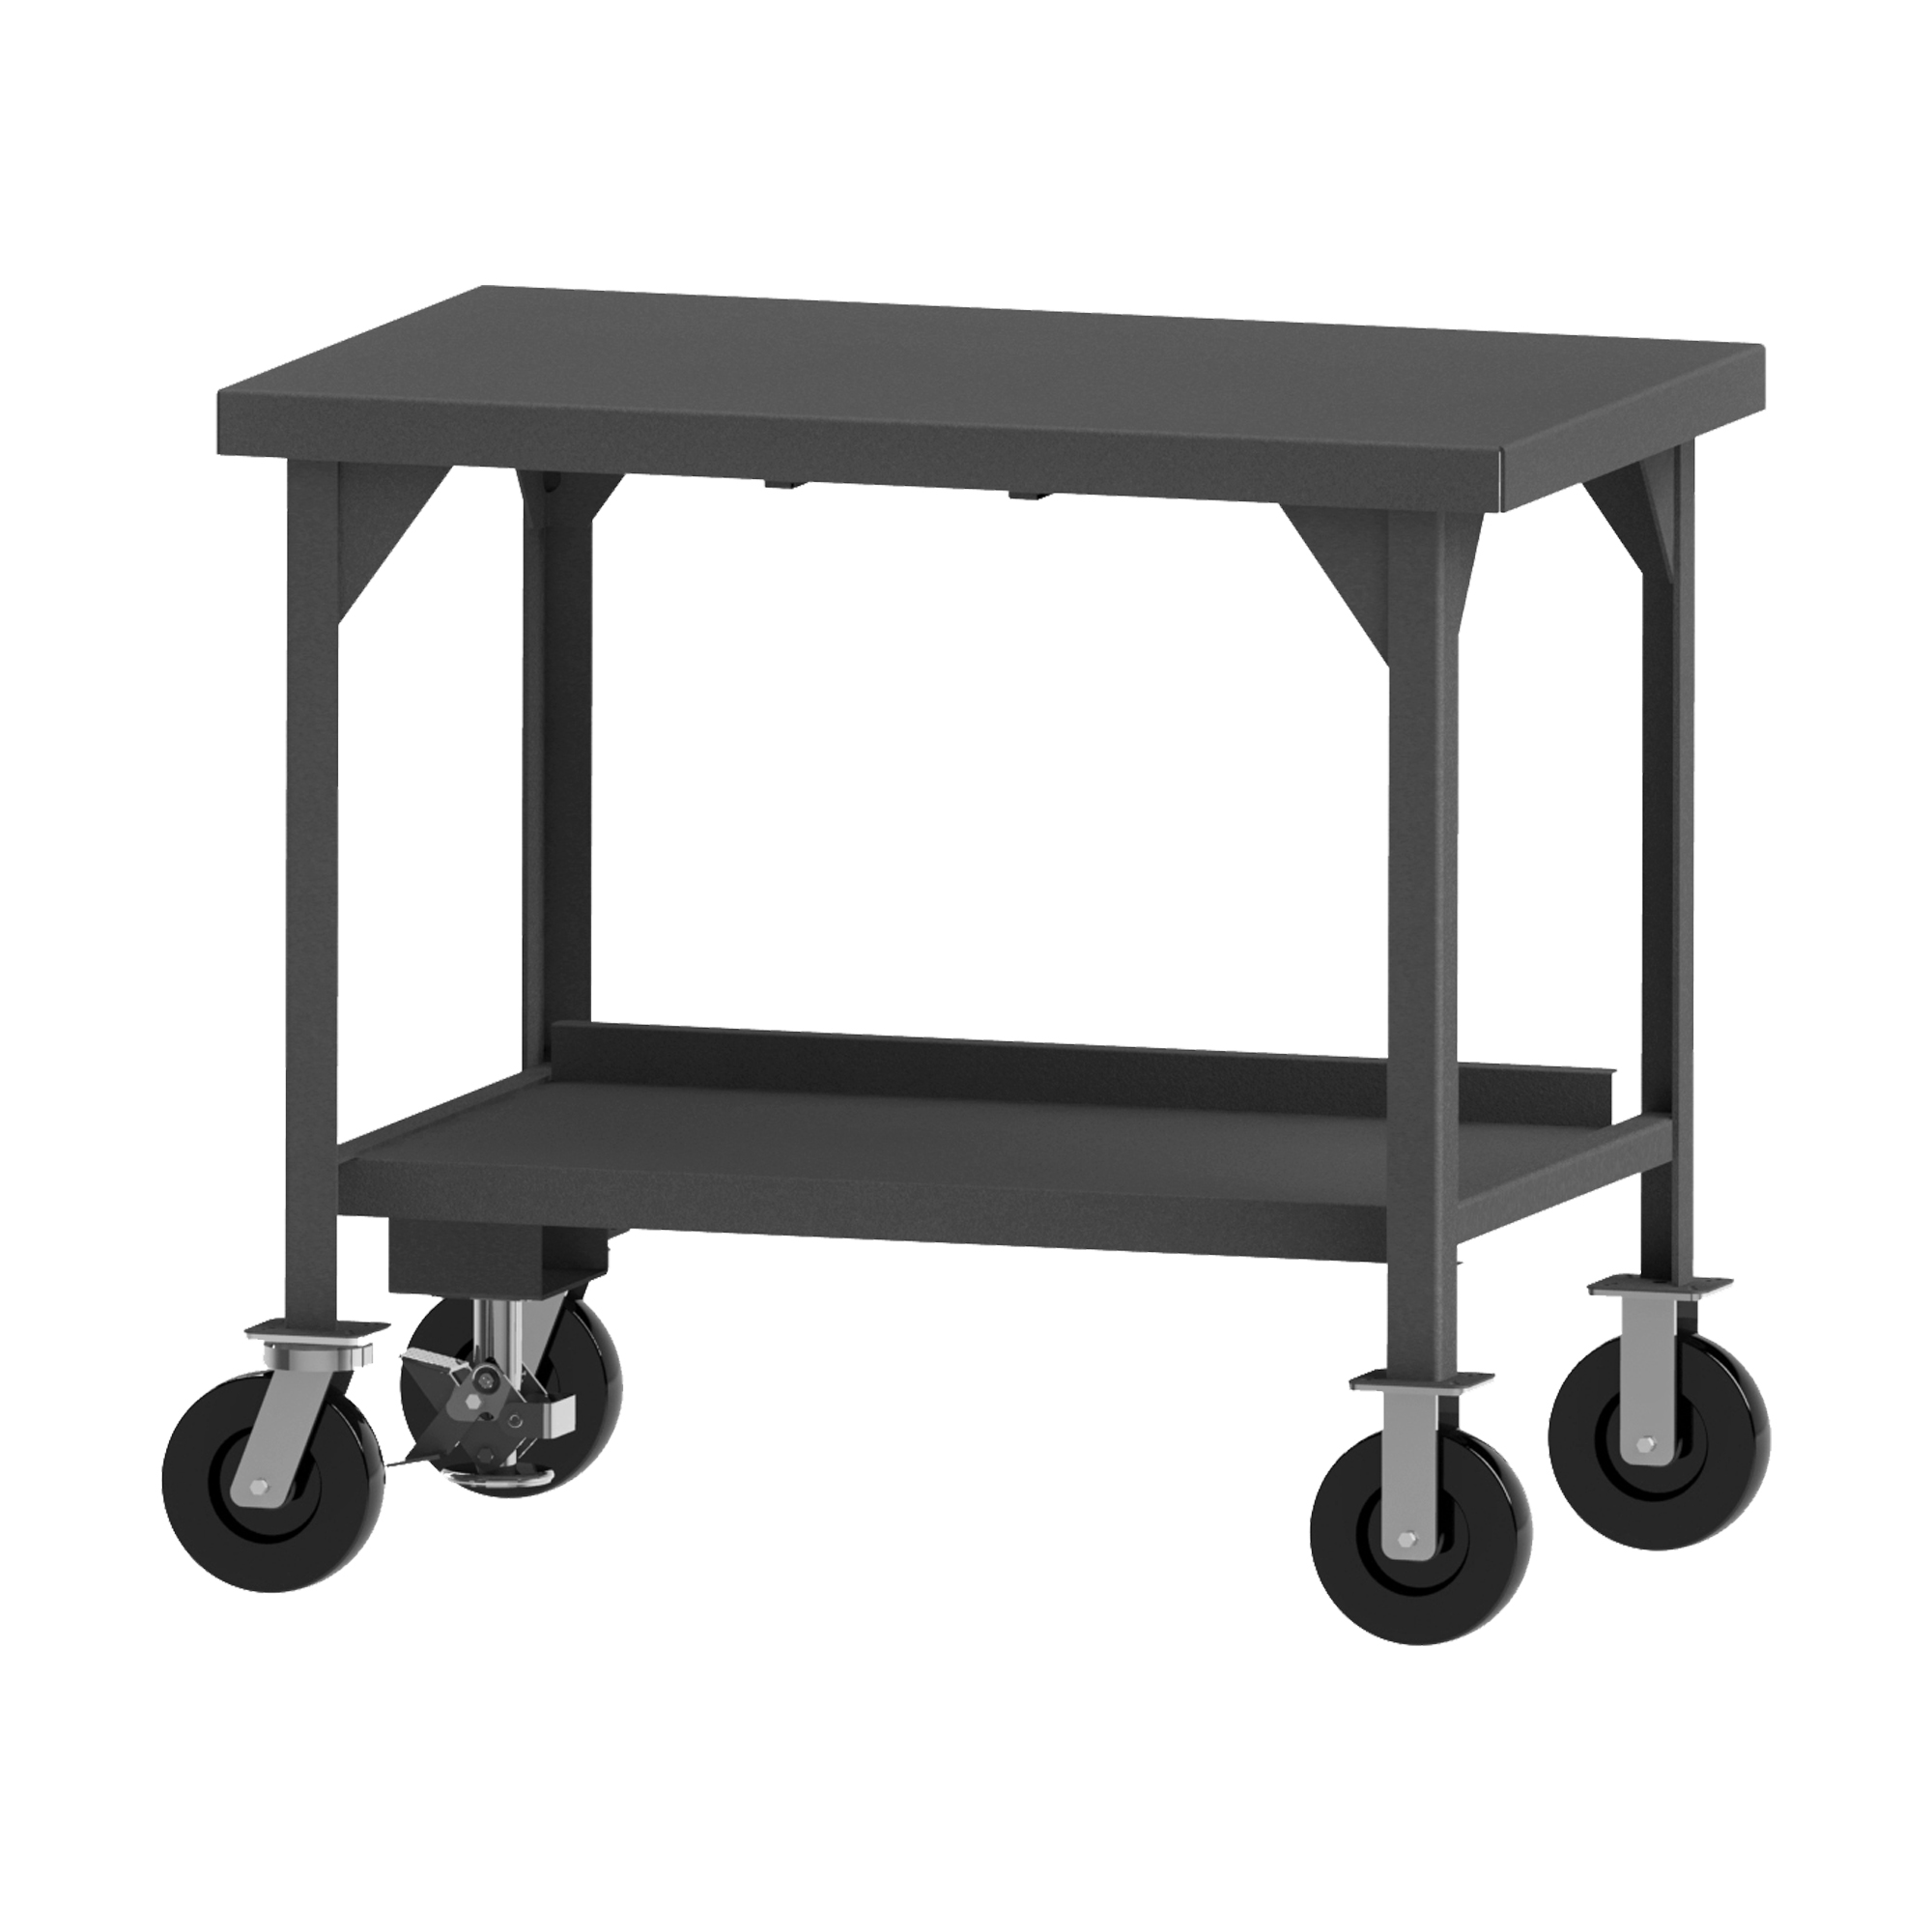 Mobile Workbench With Floor Lock, Heavy Duty, Size 48 x 30 Inch, Gray